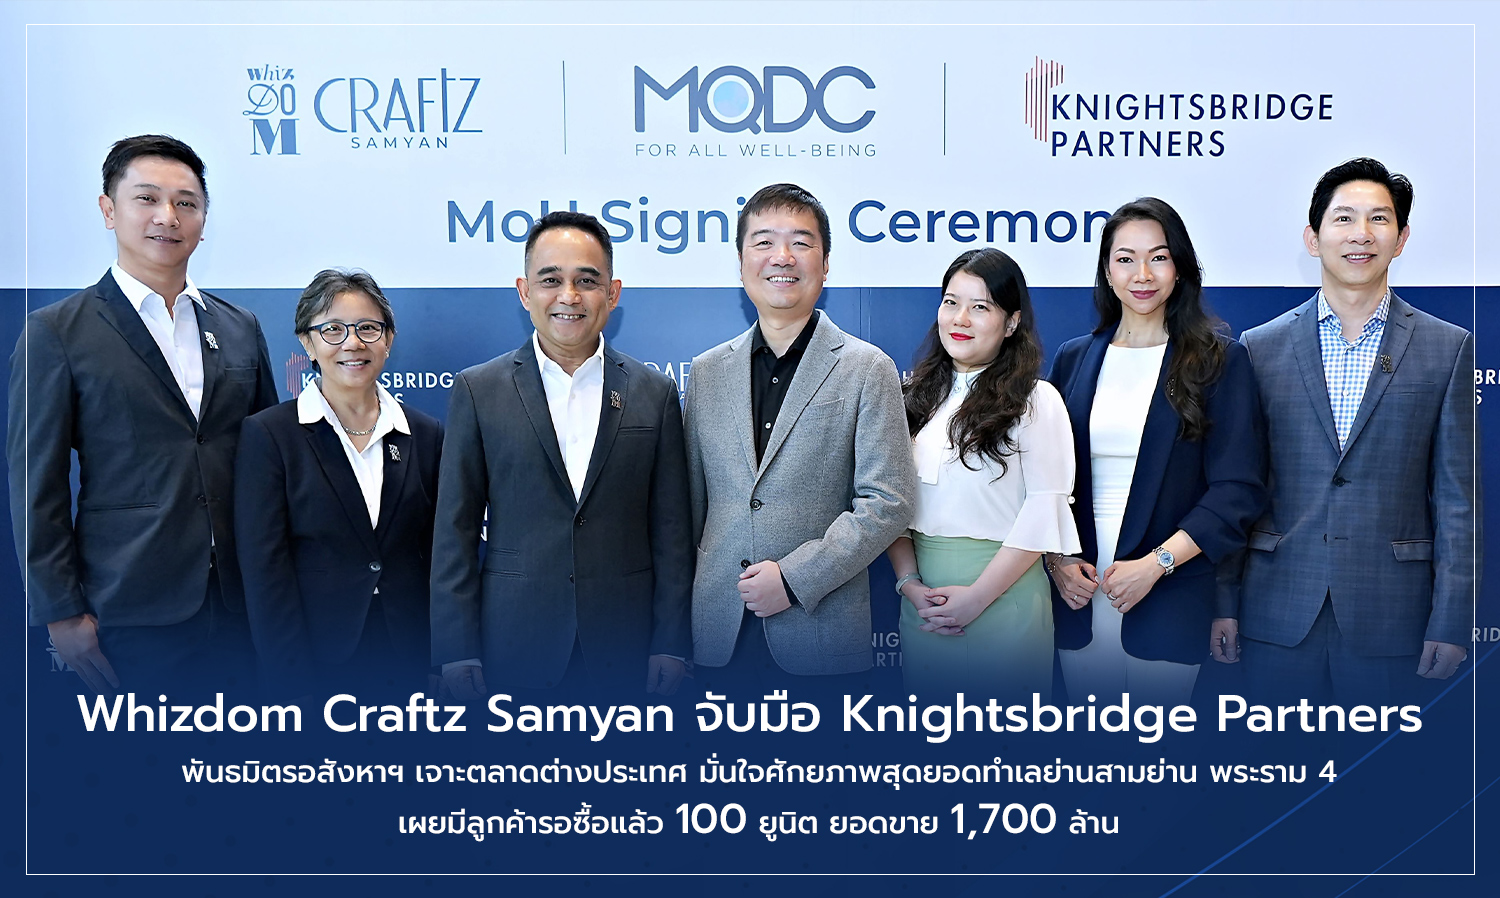 Whizdom Craftz Samyan จับมือ Knightsbridge Partners พันธมิตรอสังหาฯ เจาะตลาดต่างประเทศ มั่นใจศักยภาพสุดยอดทำเลย่านสามย่าน พระราม 4 เผยมีลูกค้ารอซื้อแล้ว 100 ยูนิต ยอดขาย 1,700 ล้าน